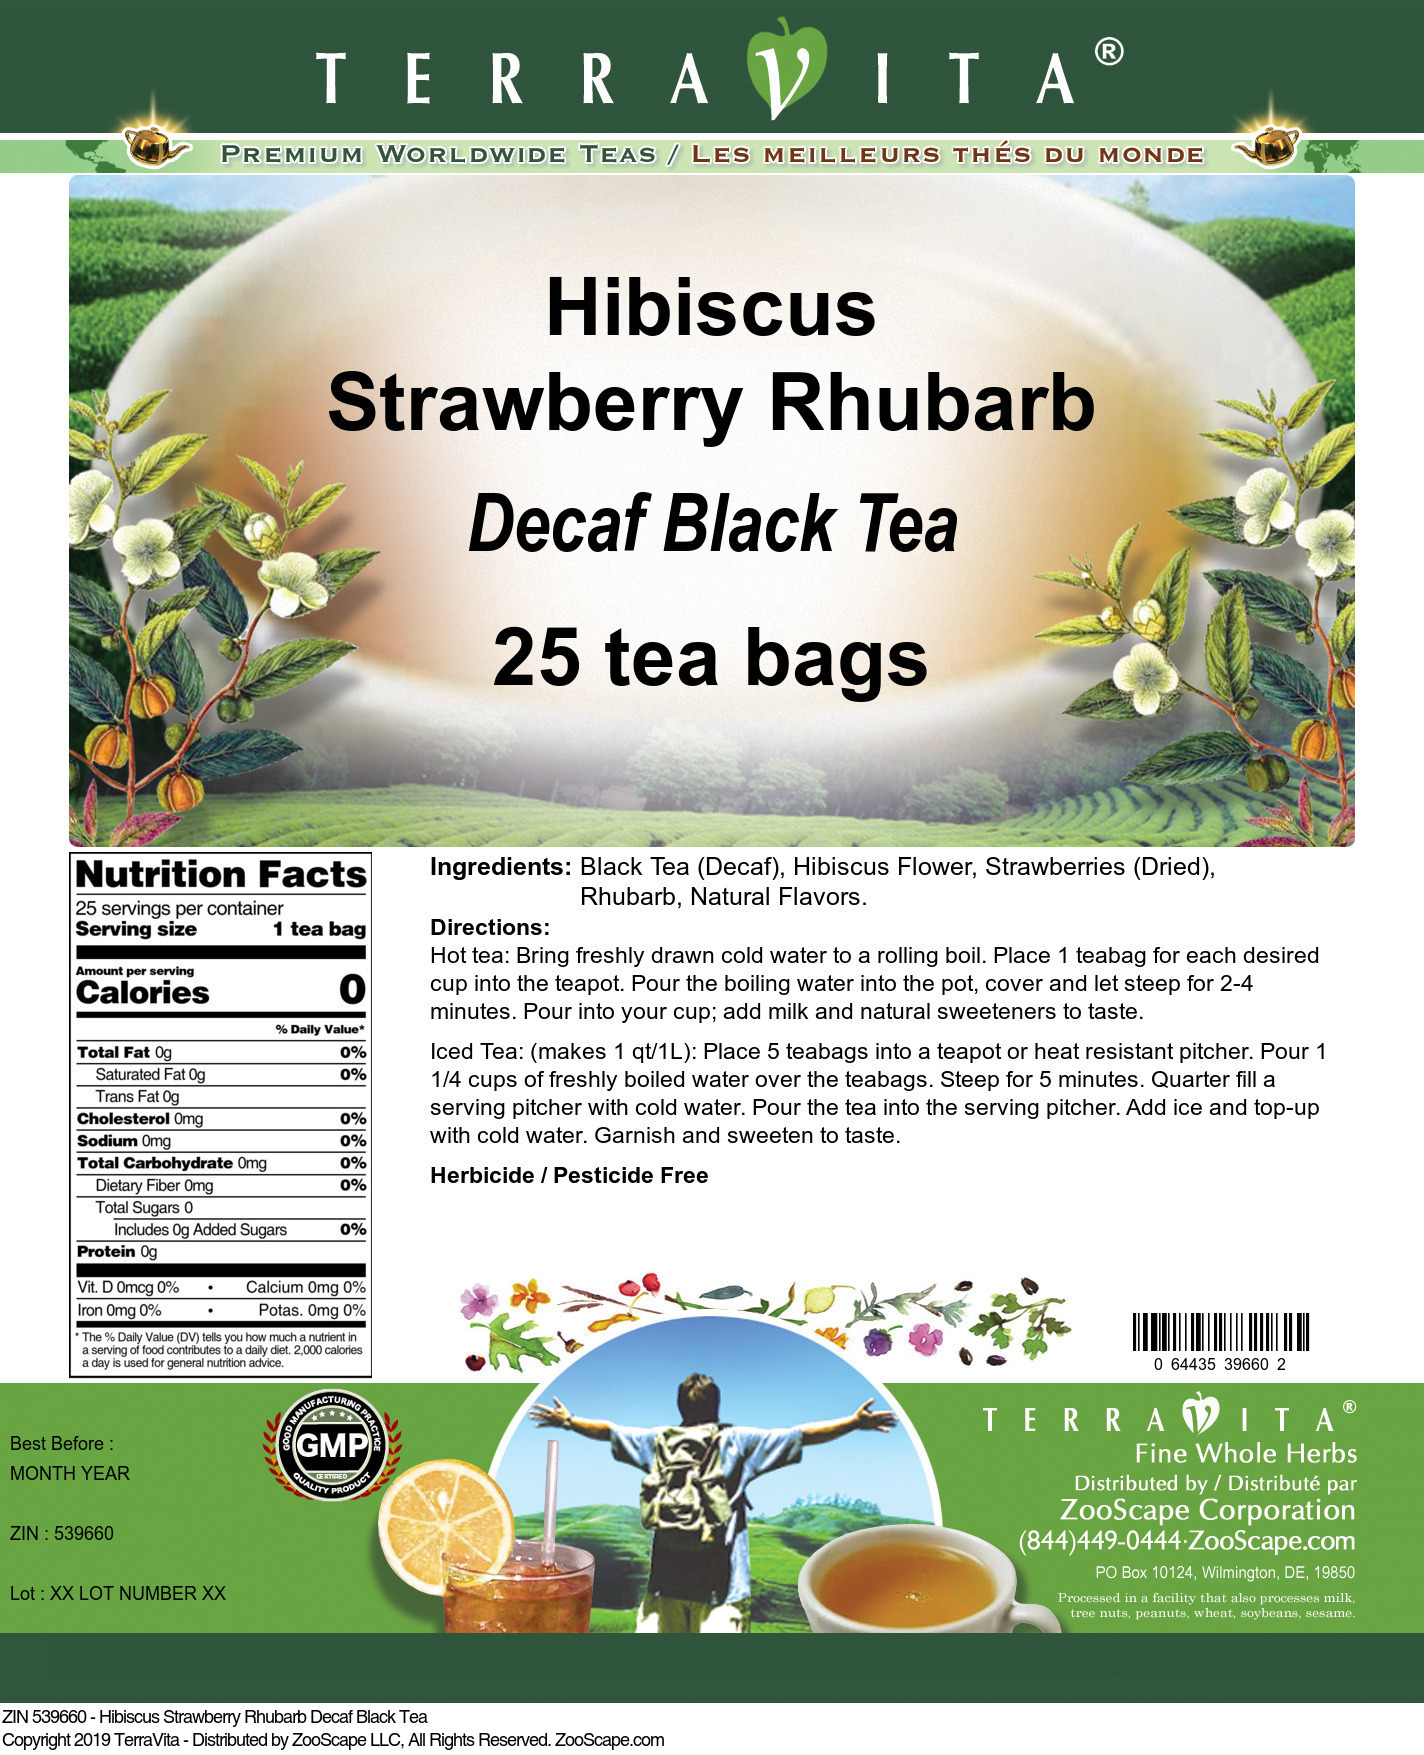 Hibiscus Strawberry Rhubarb Decaf Black Tea - Label